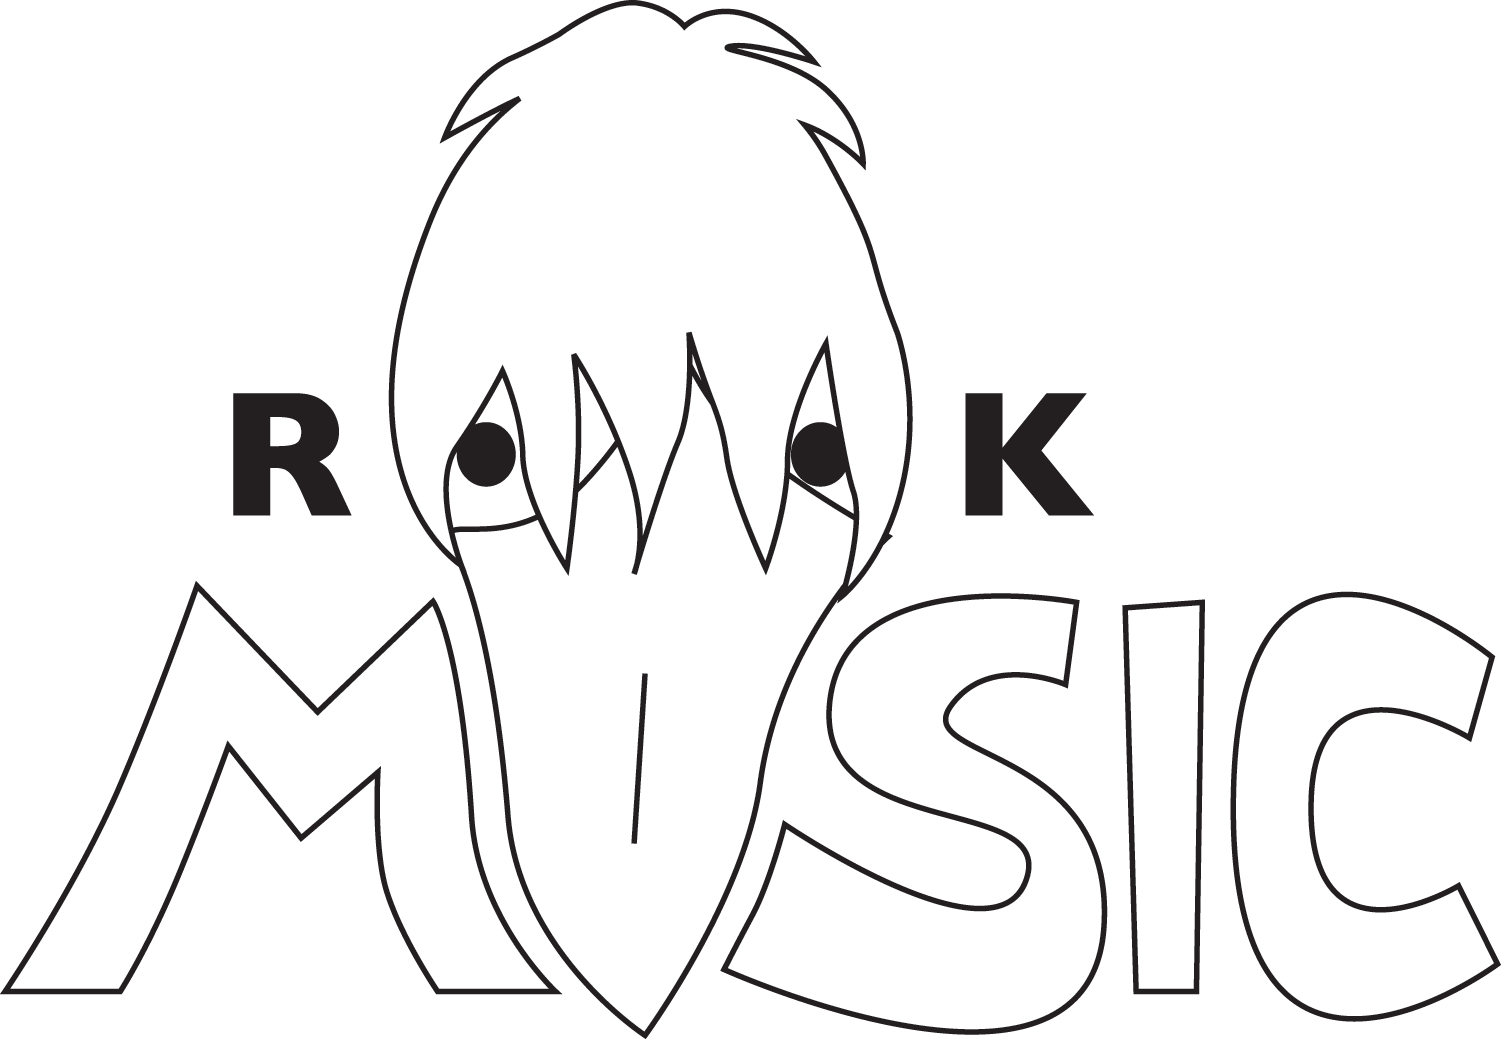 Rook Music logo